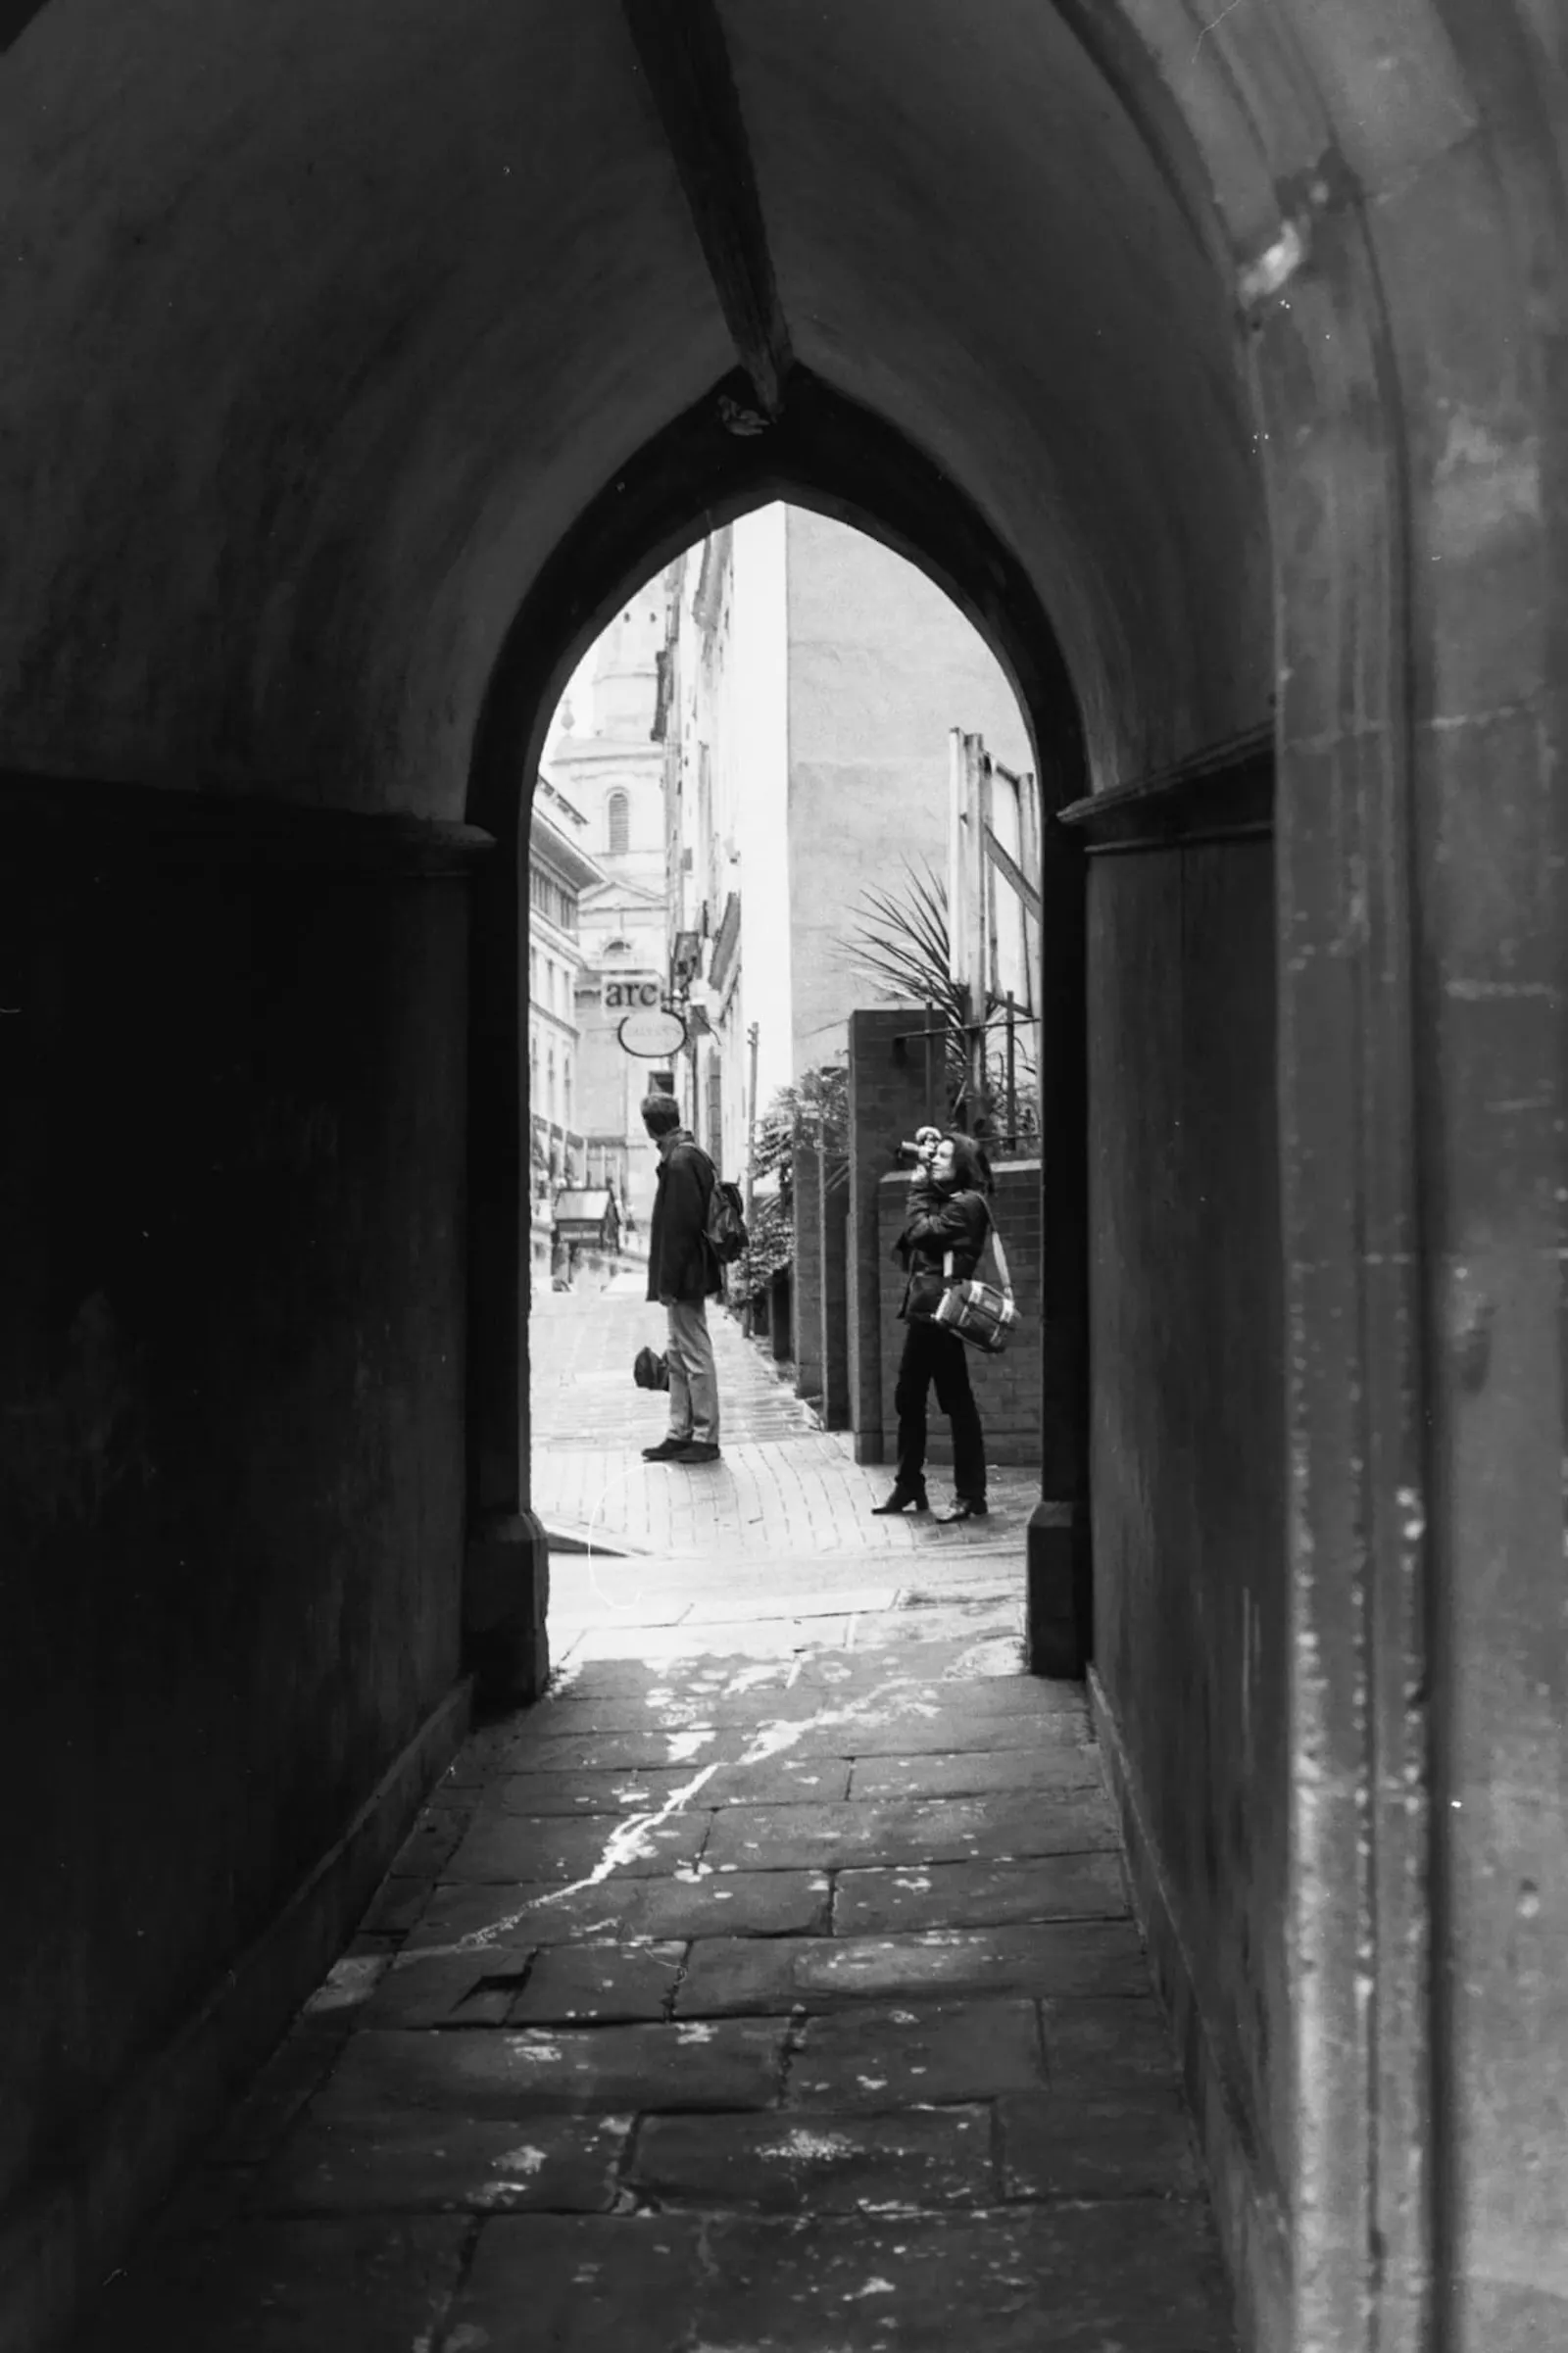 Seen through a stone arch, a woman is taking photos